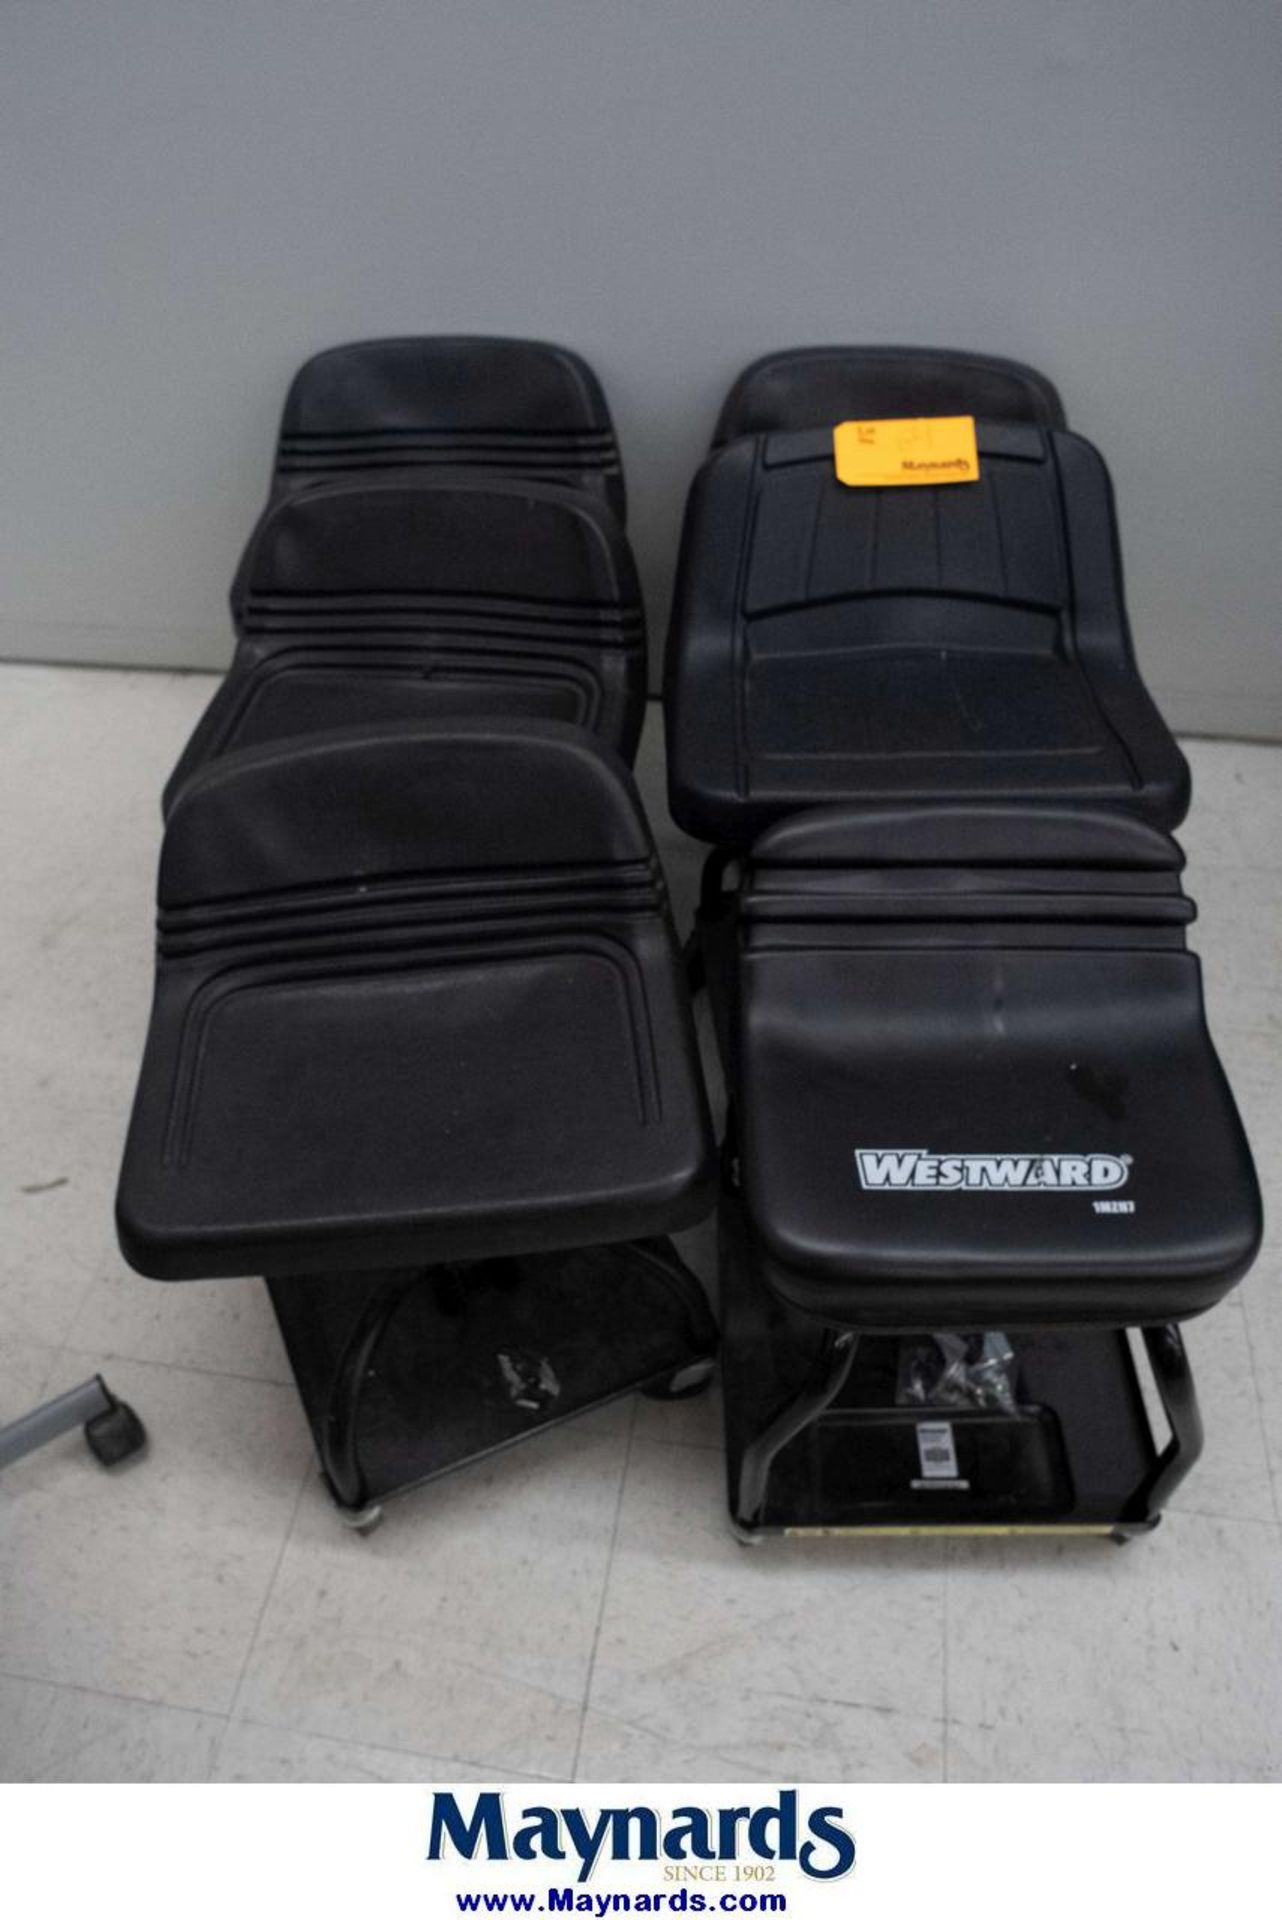 WESTWARD 1MZH7 Creeper Seats - Image 2 of 9